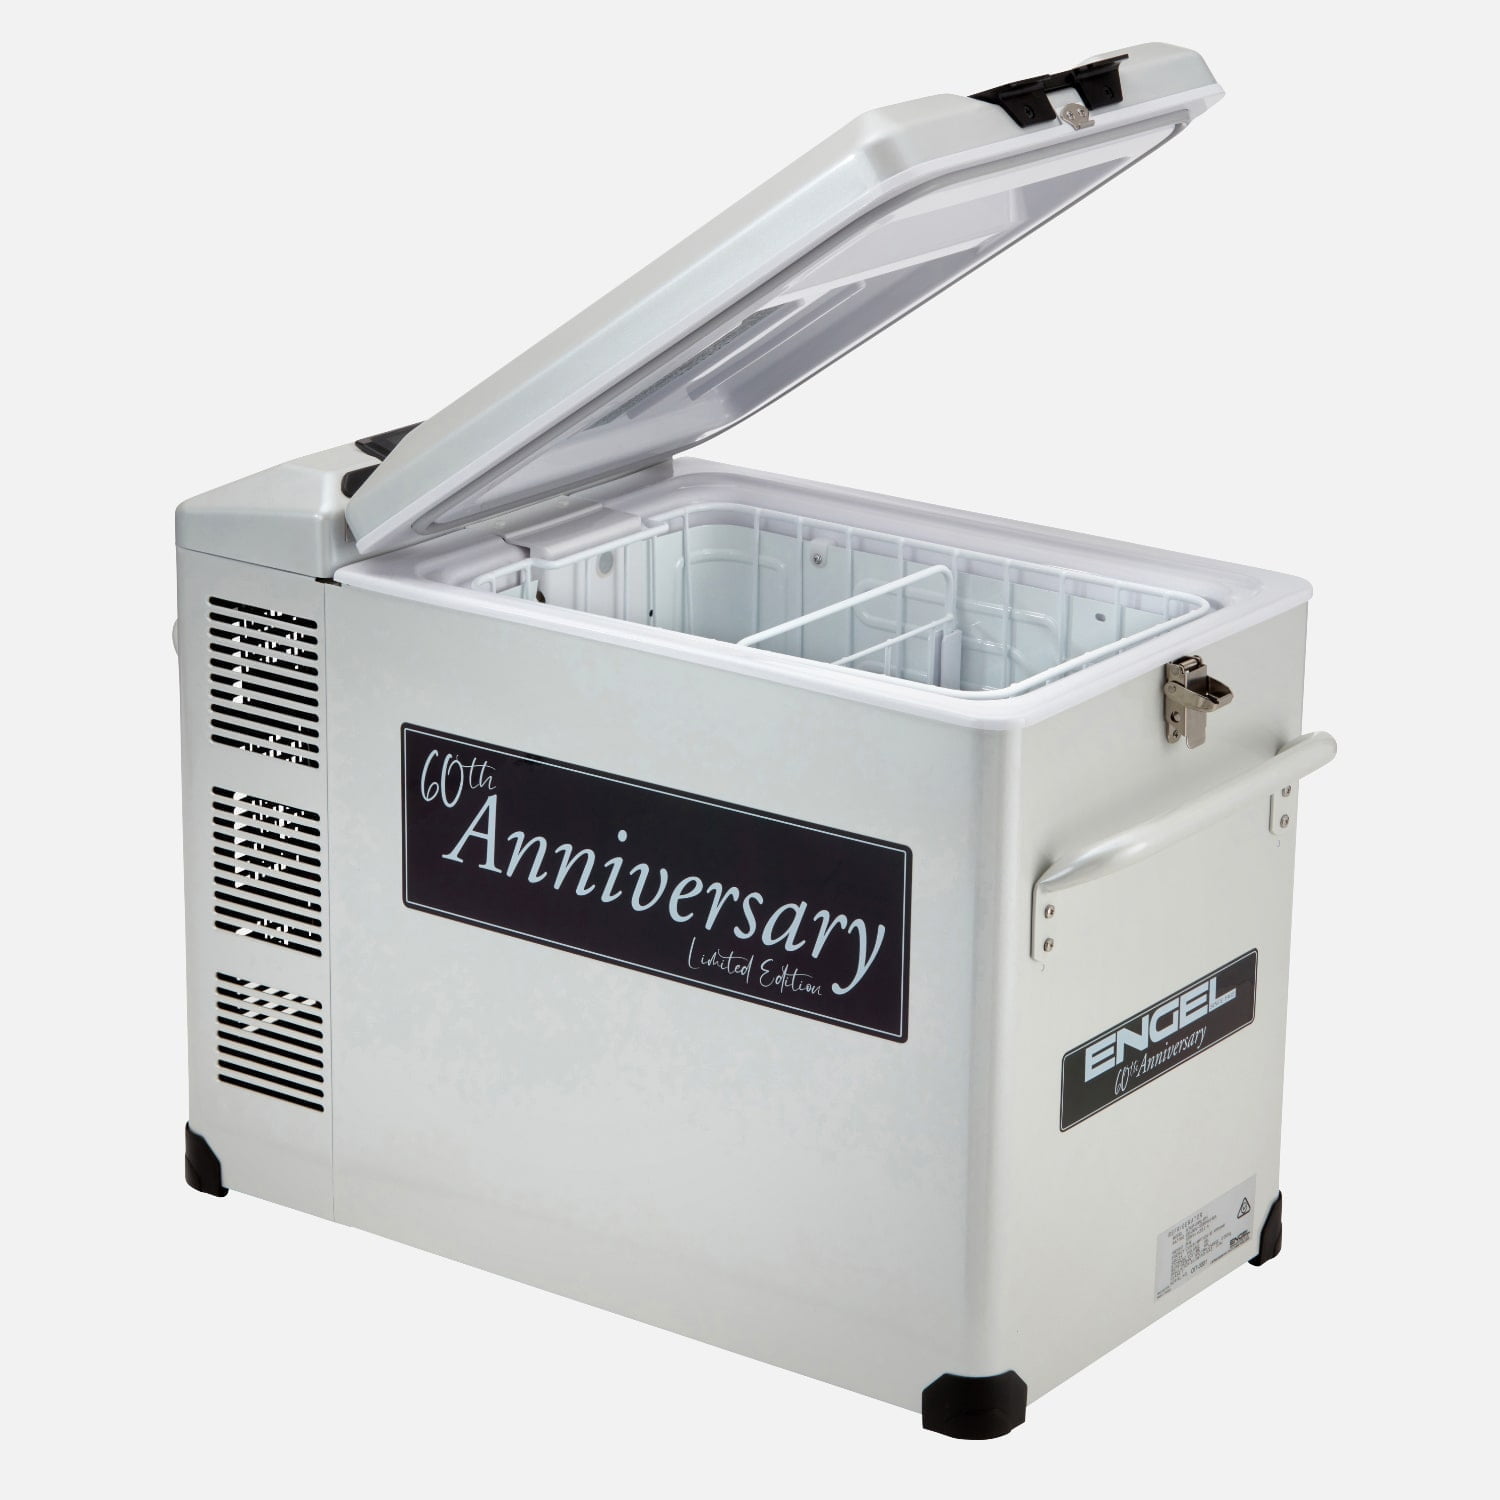 Engel MT-V Portable Fridge Freezer 40 Litre 60th Anniversary Limited Edition MT45F-G4NL-WH Open